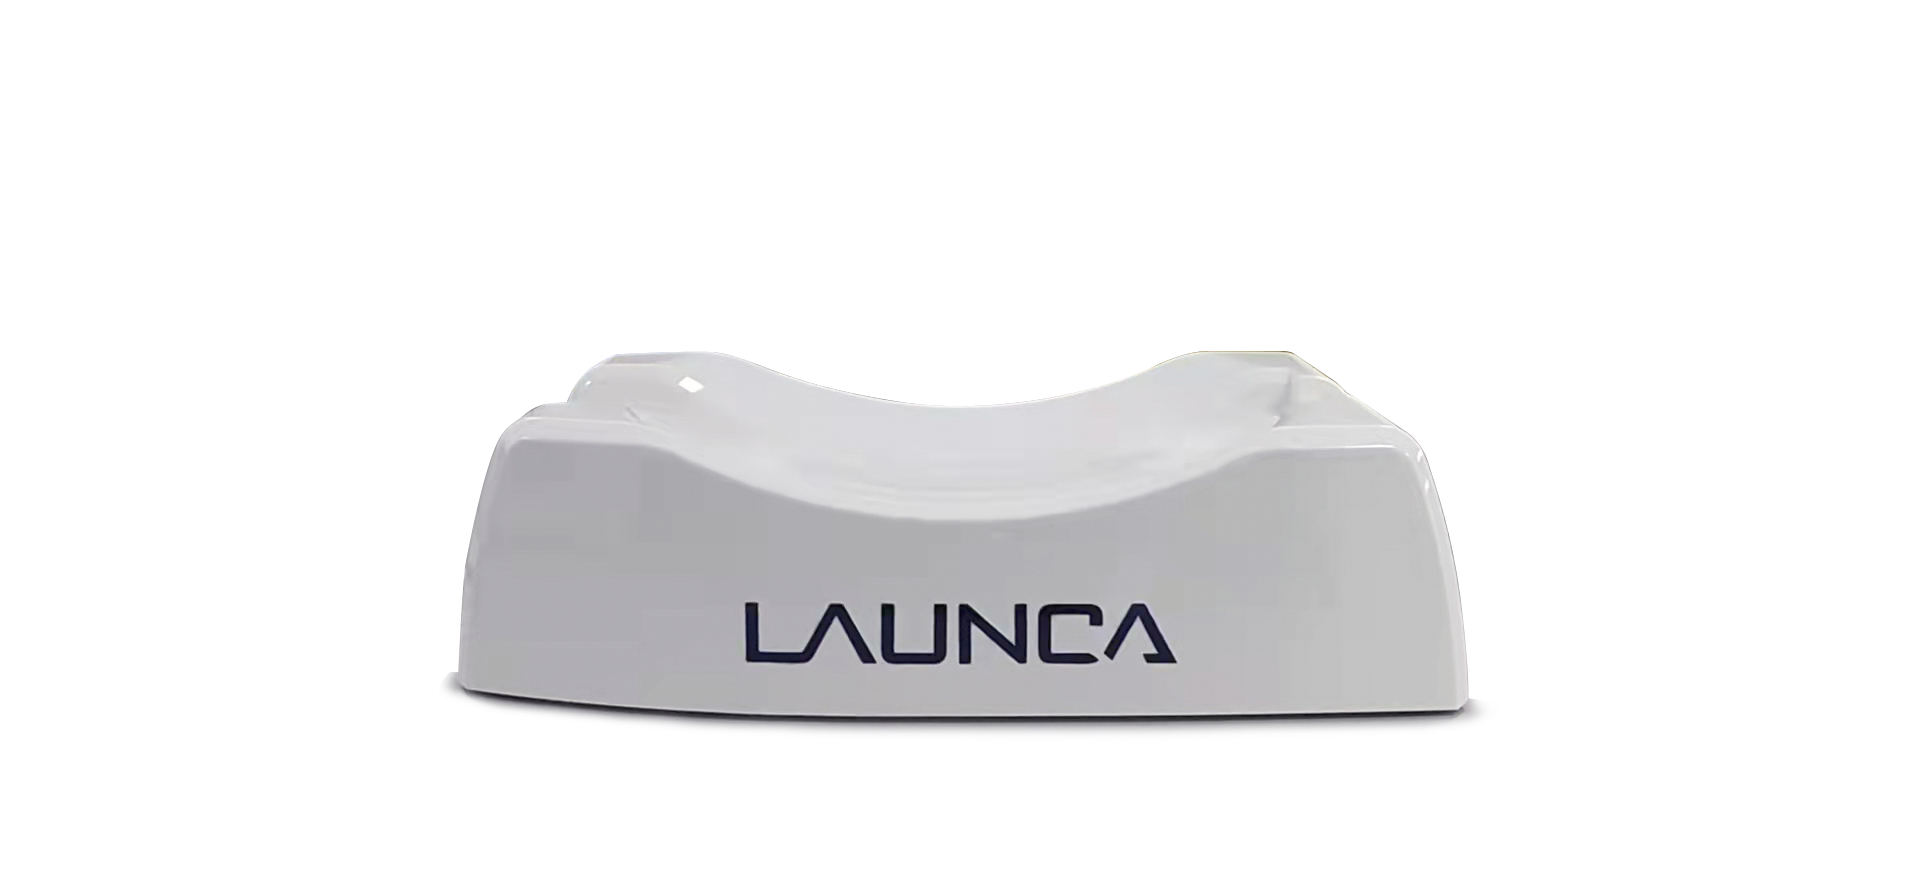 Launca DL-206 Intraoral Scanner Handpiece holder